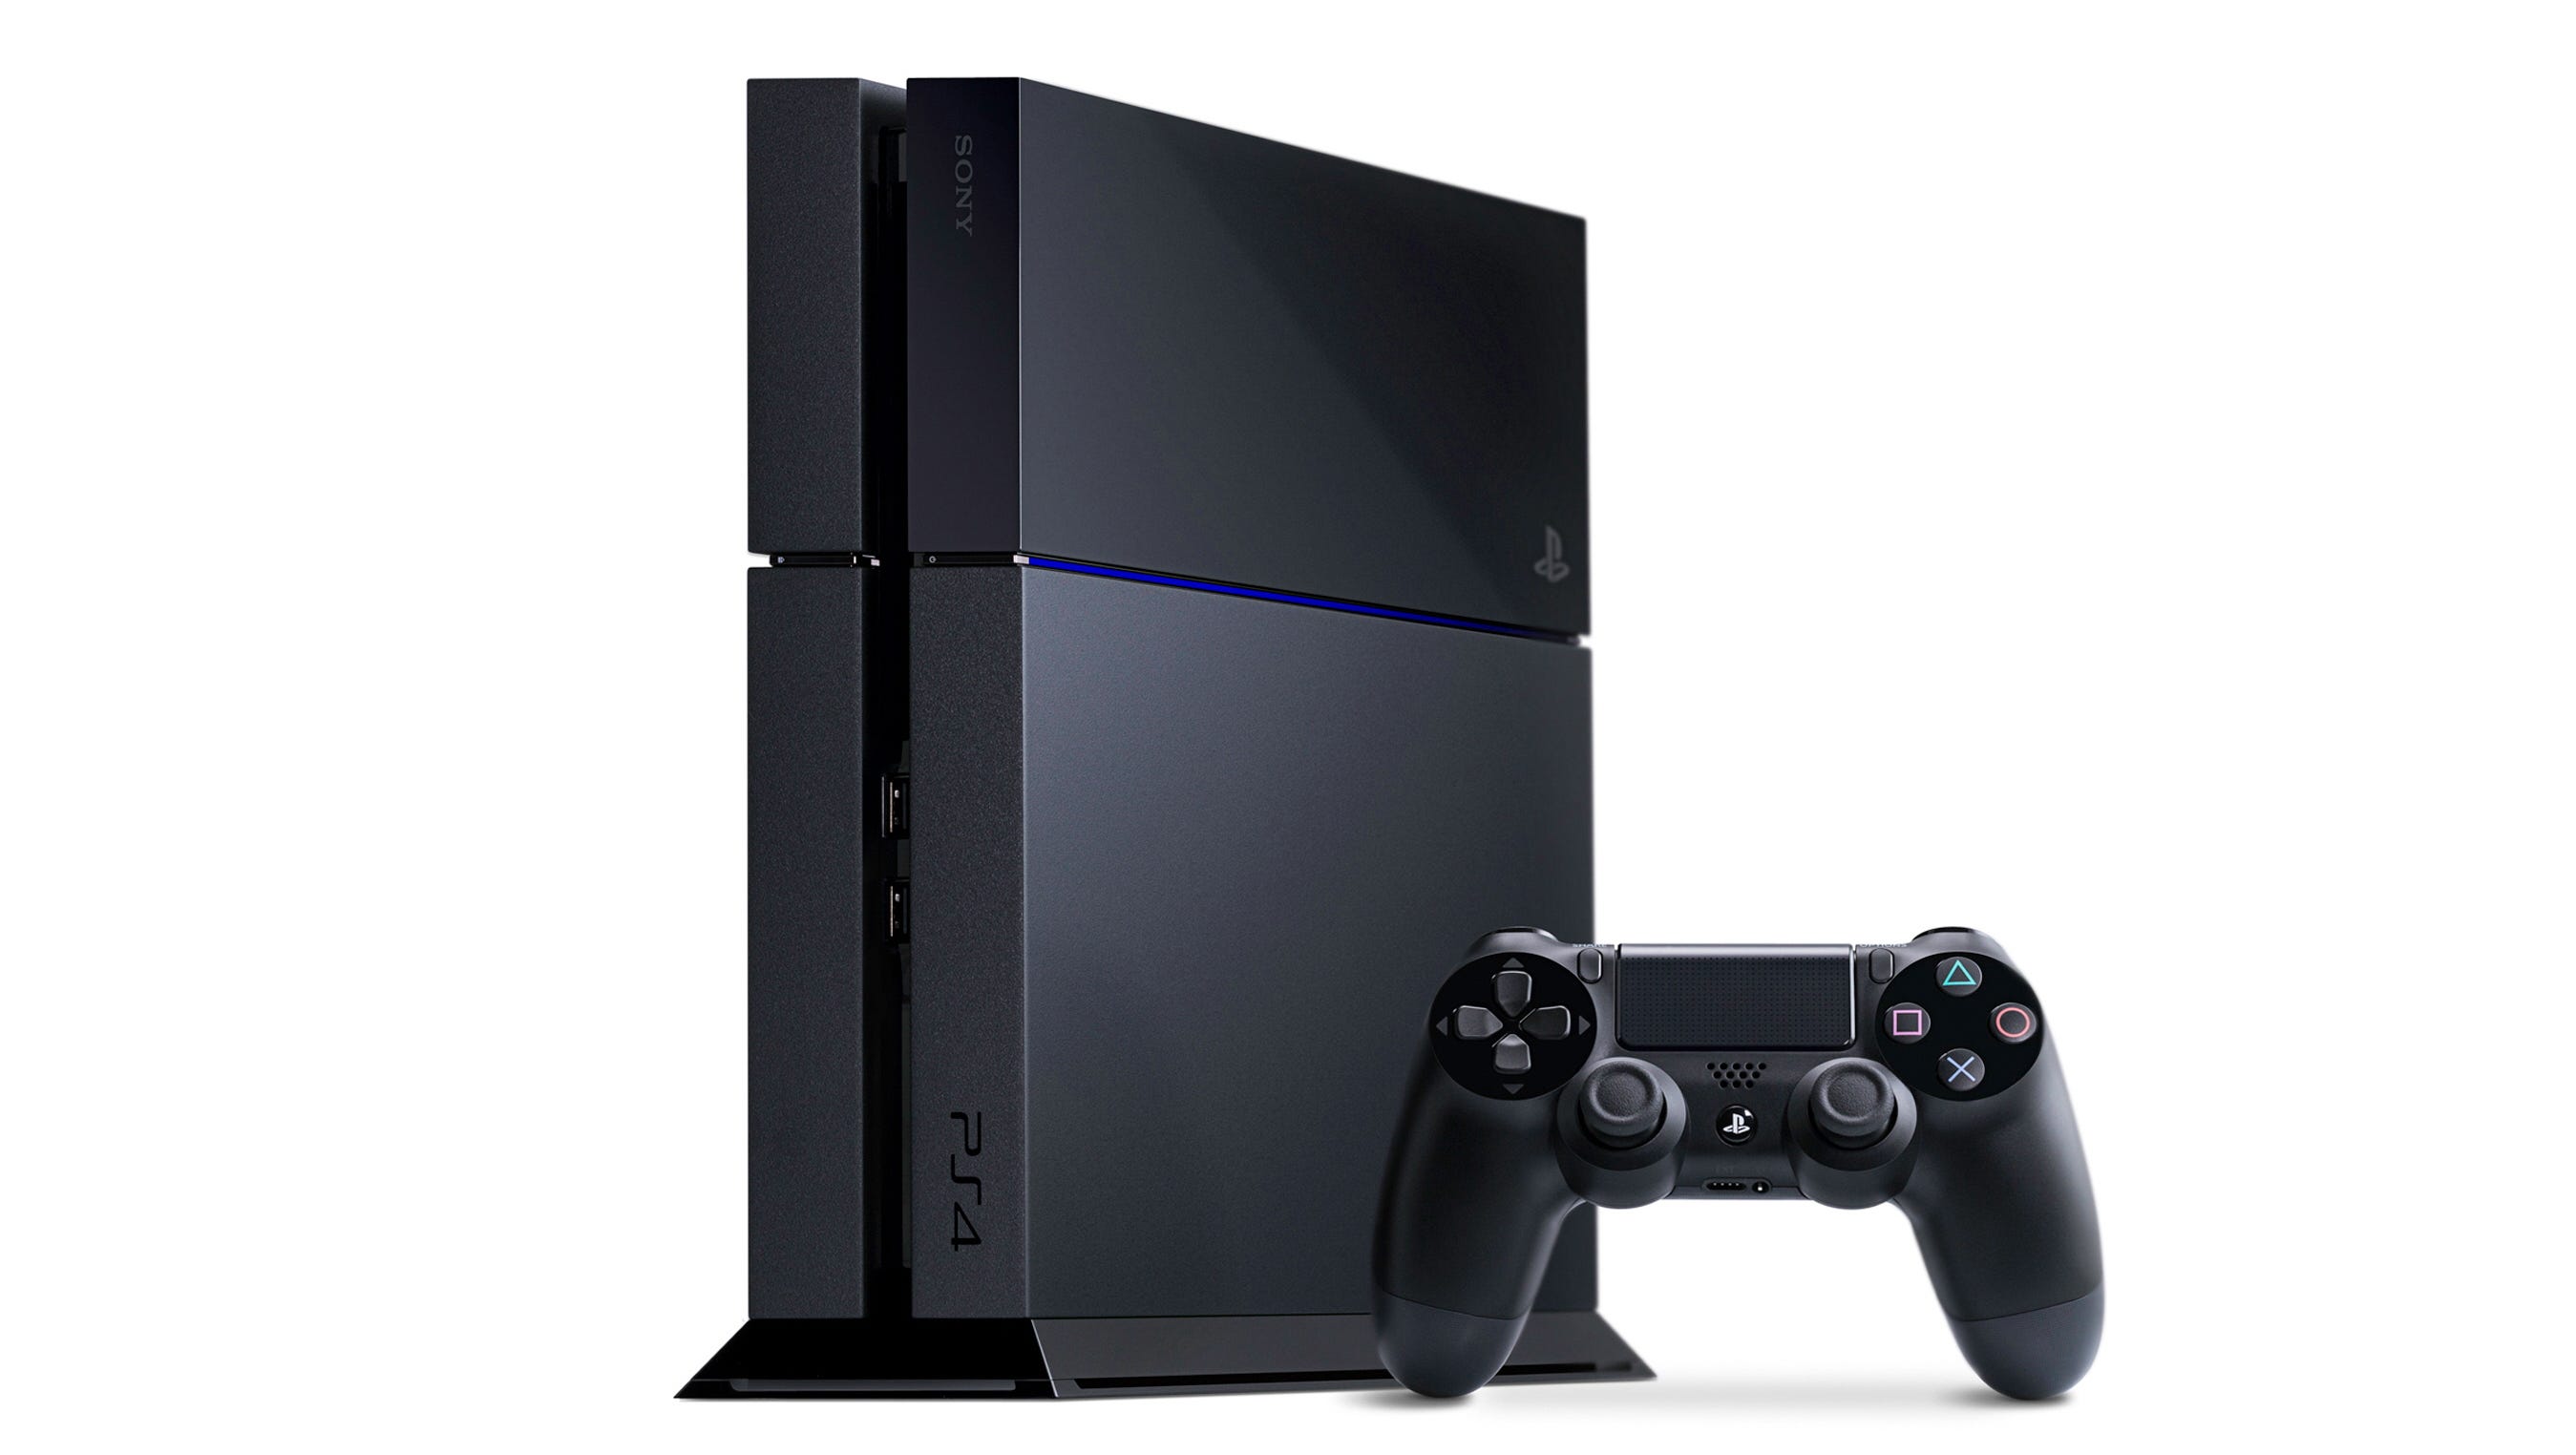 telex Van God droog Sony slashes U.S. price of PlayStation 4 to $349